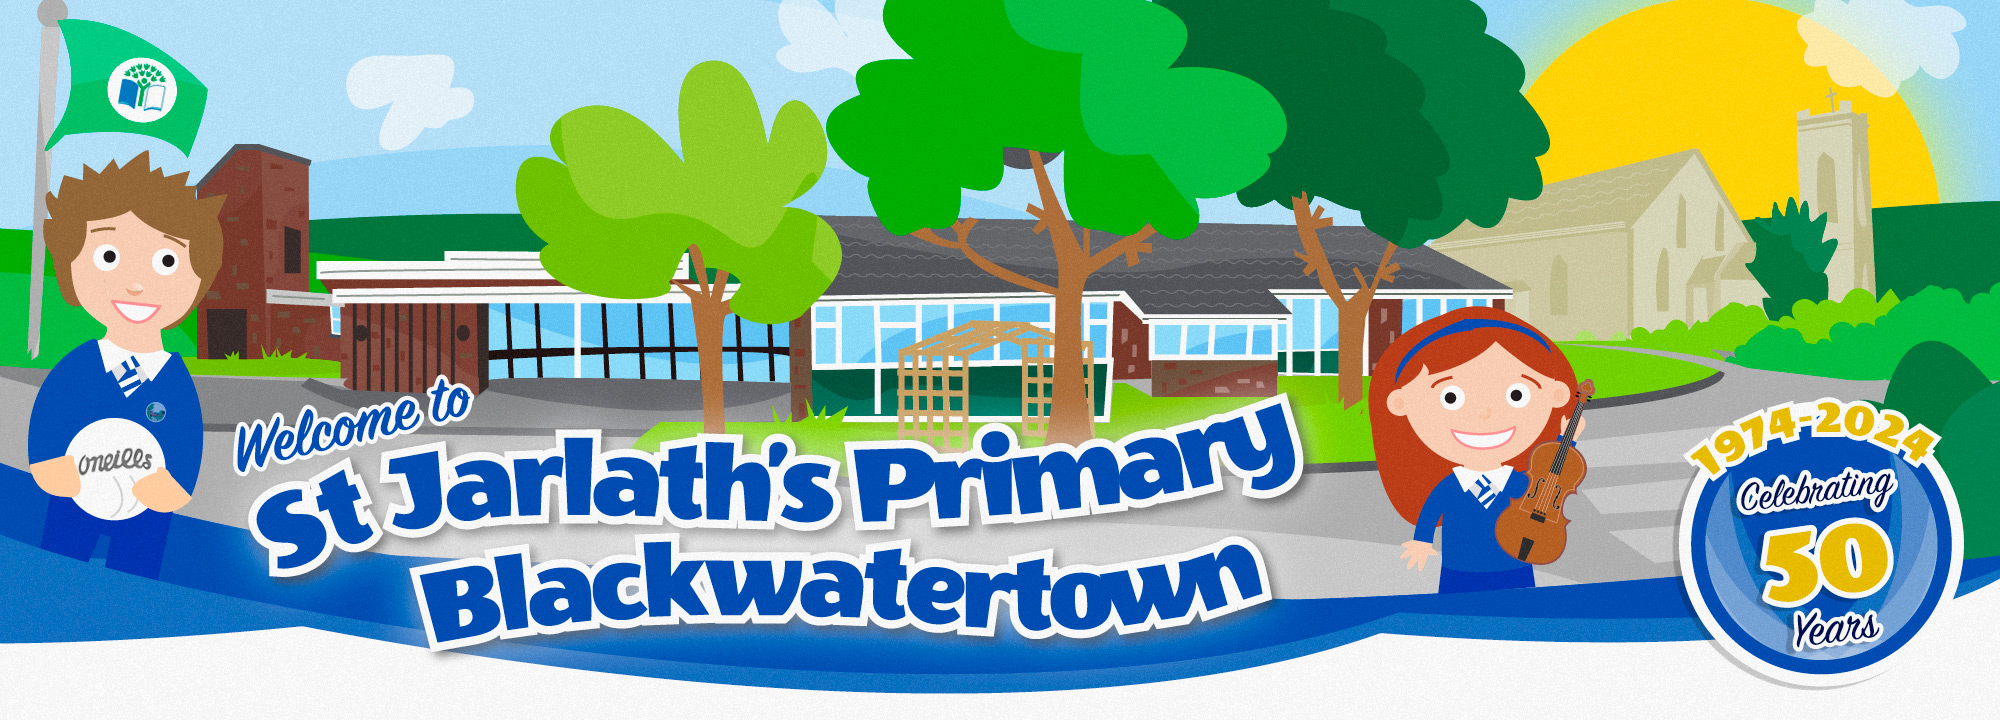 St Jarlath's Primary School, Blackwatertown